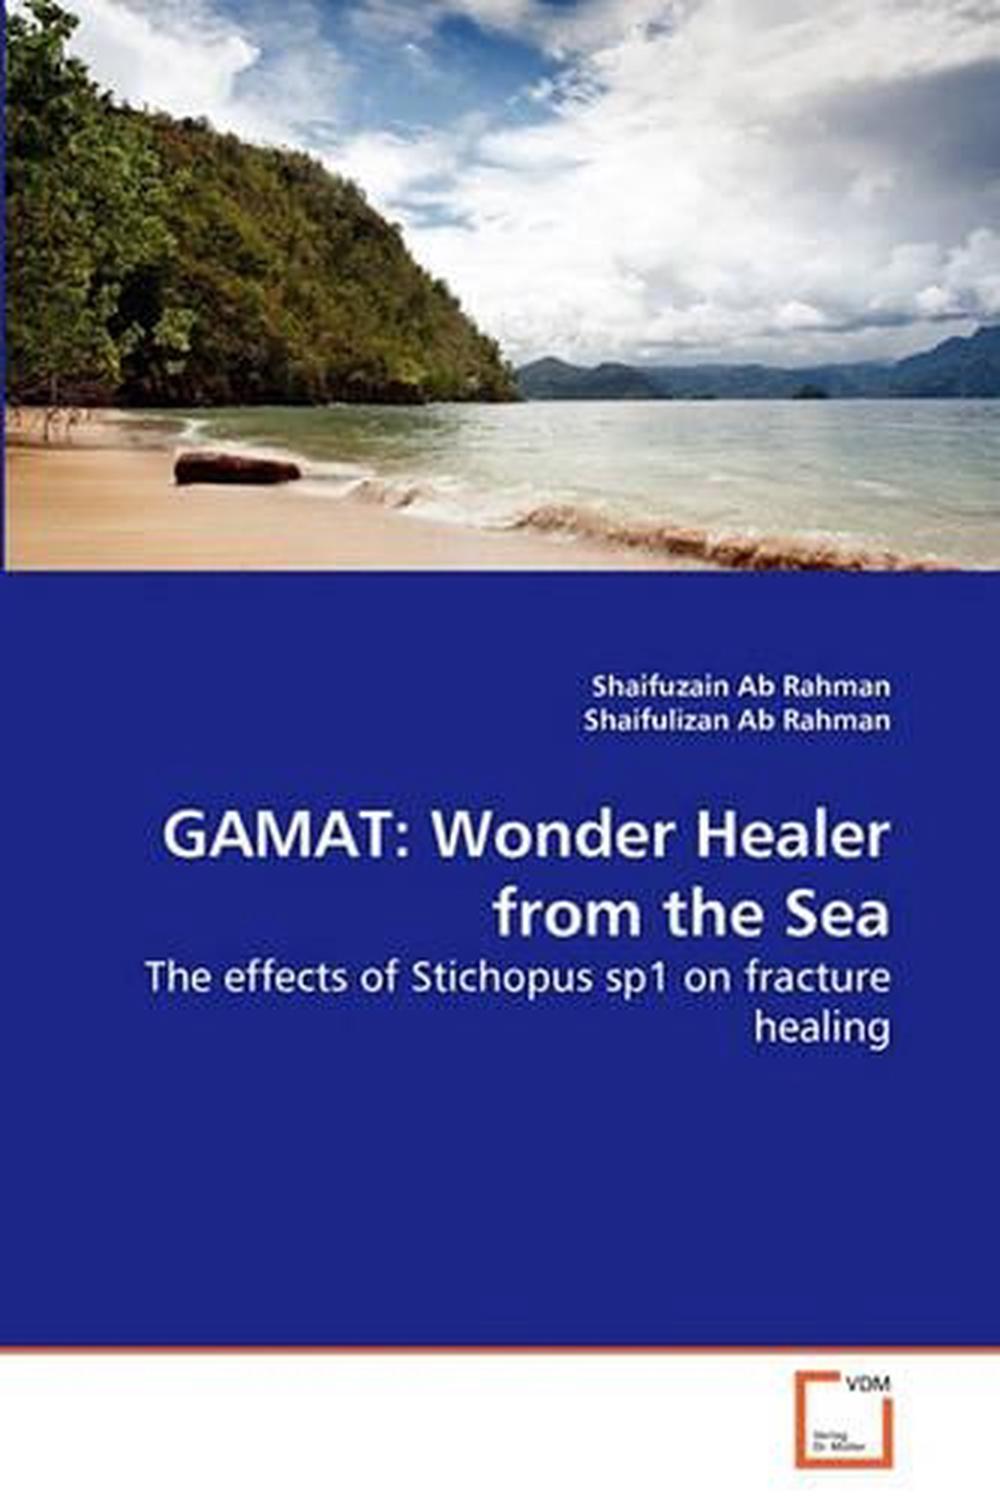 Gamat: The effects of Stichopus sp1 on fracture healing by Shaifuzain Ab Rahman  - Afbeelding 1 van 1